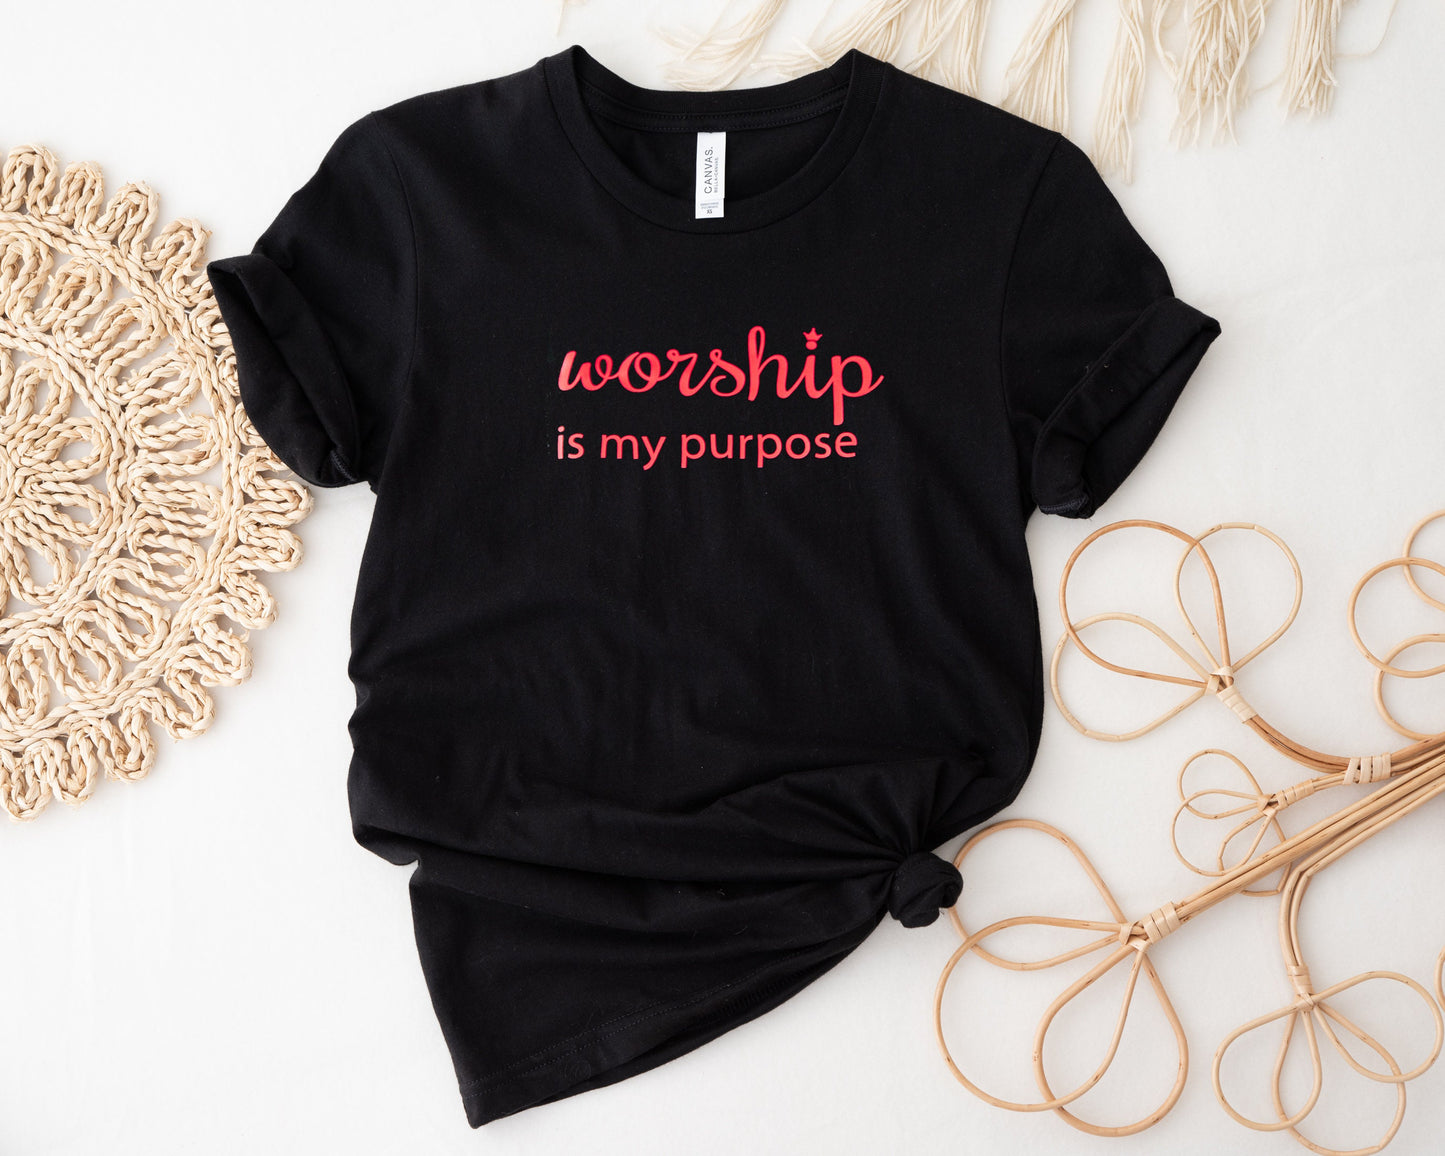 True Worship Shirt, Christian Tee, Christian Shirt Gift, Jesus Shirt, Religious Apparel, Loved Shirt, Church Shirts, Christian Tee for Women